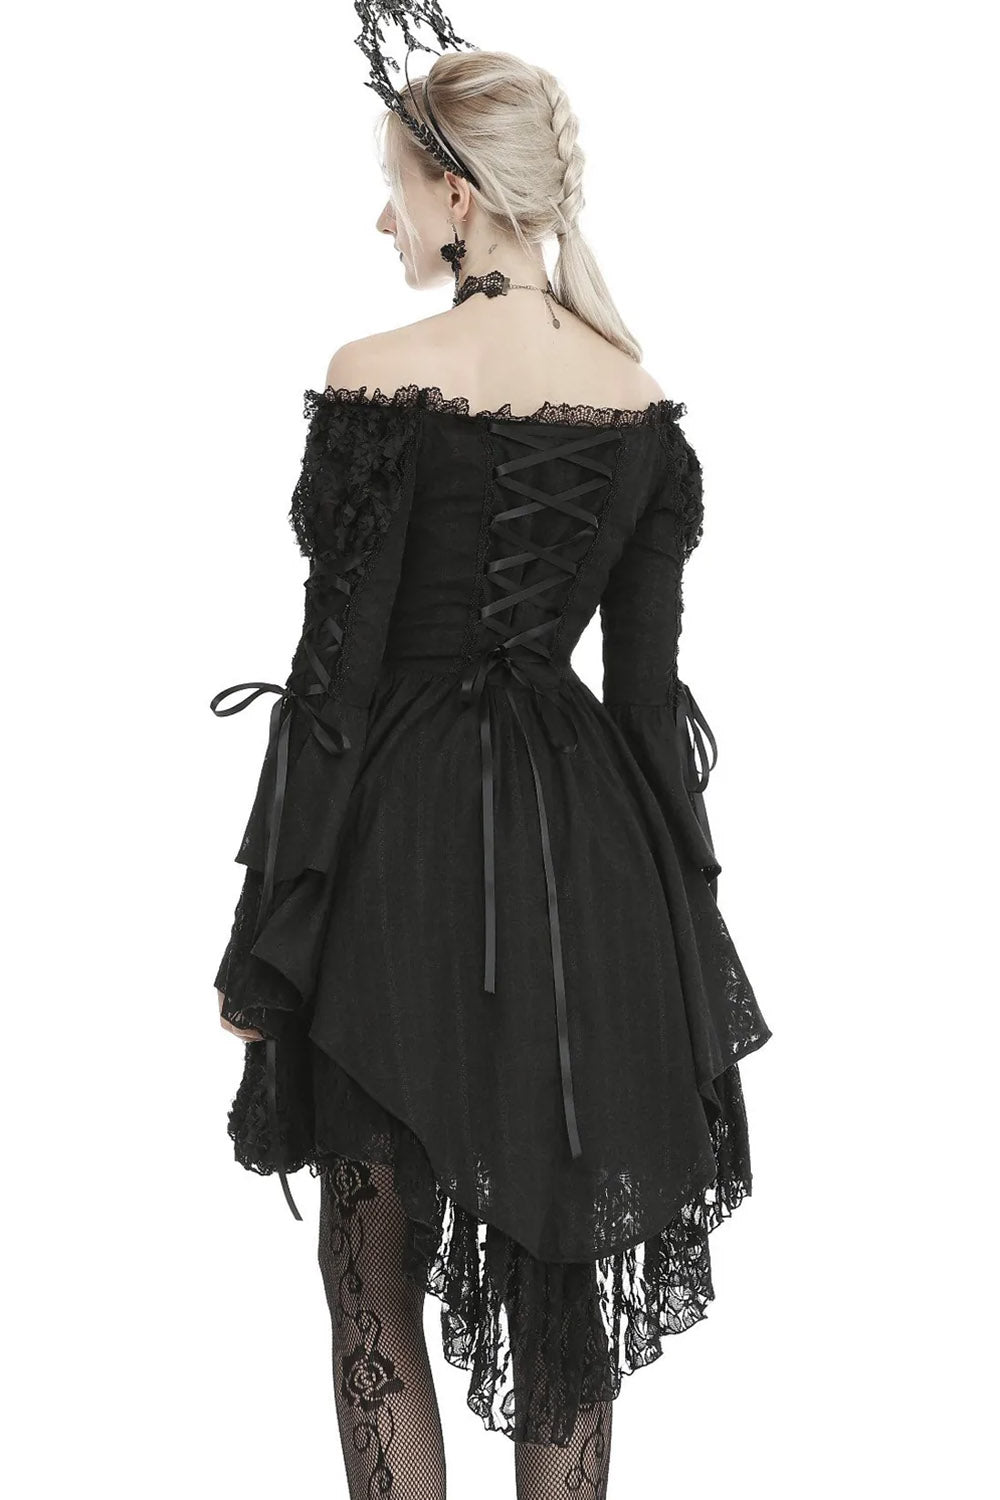 Victorian Vampress Dress